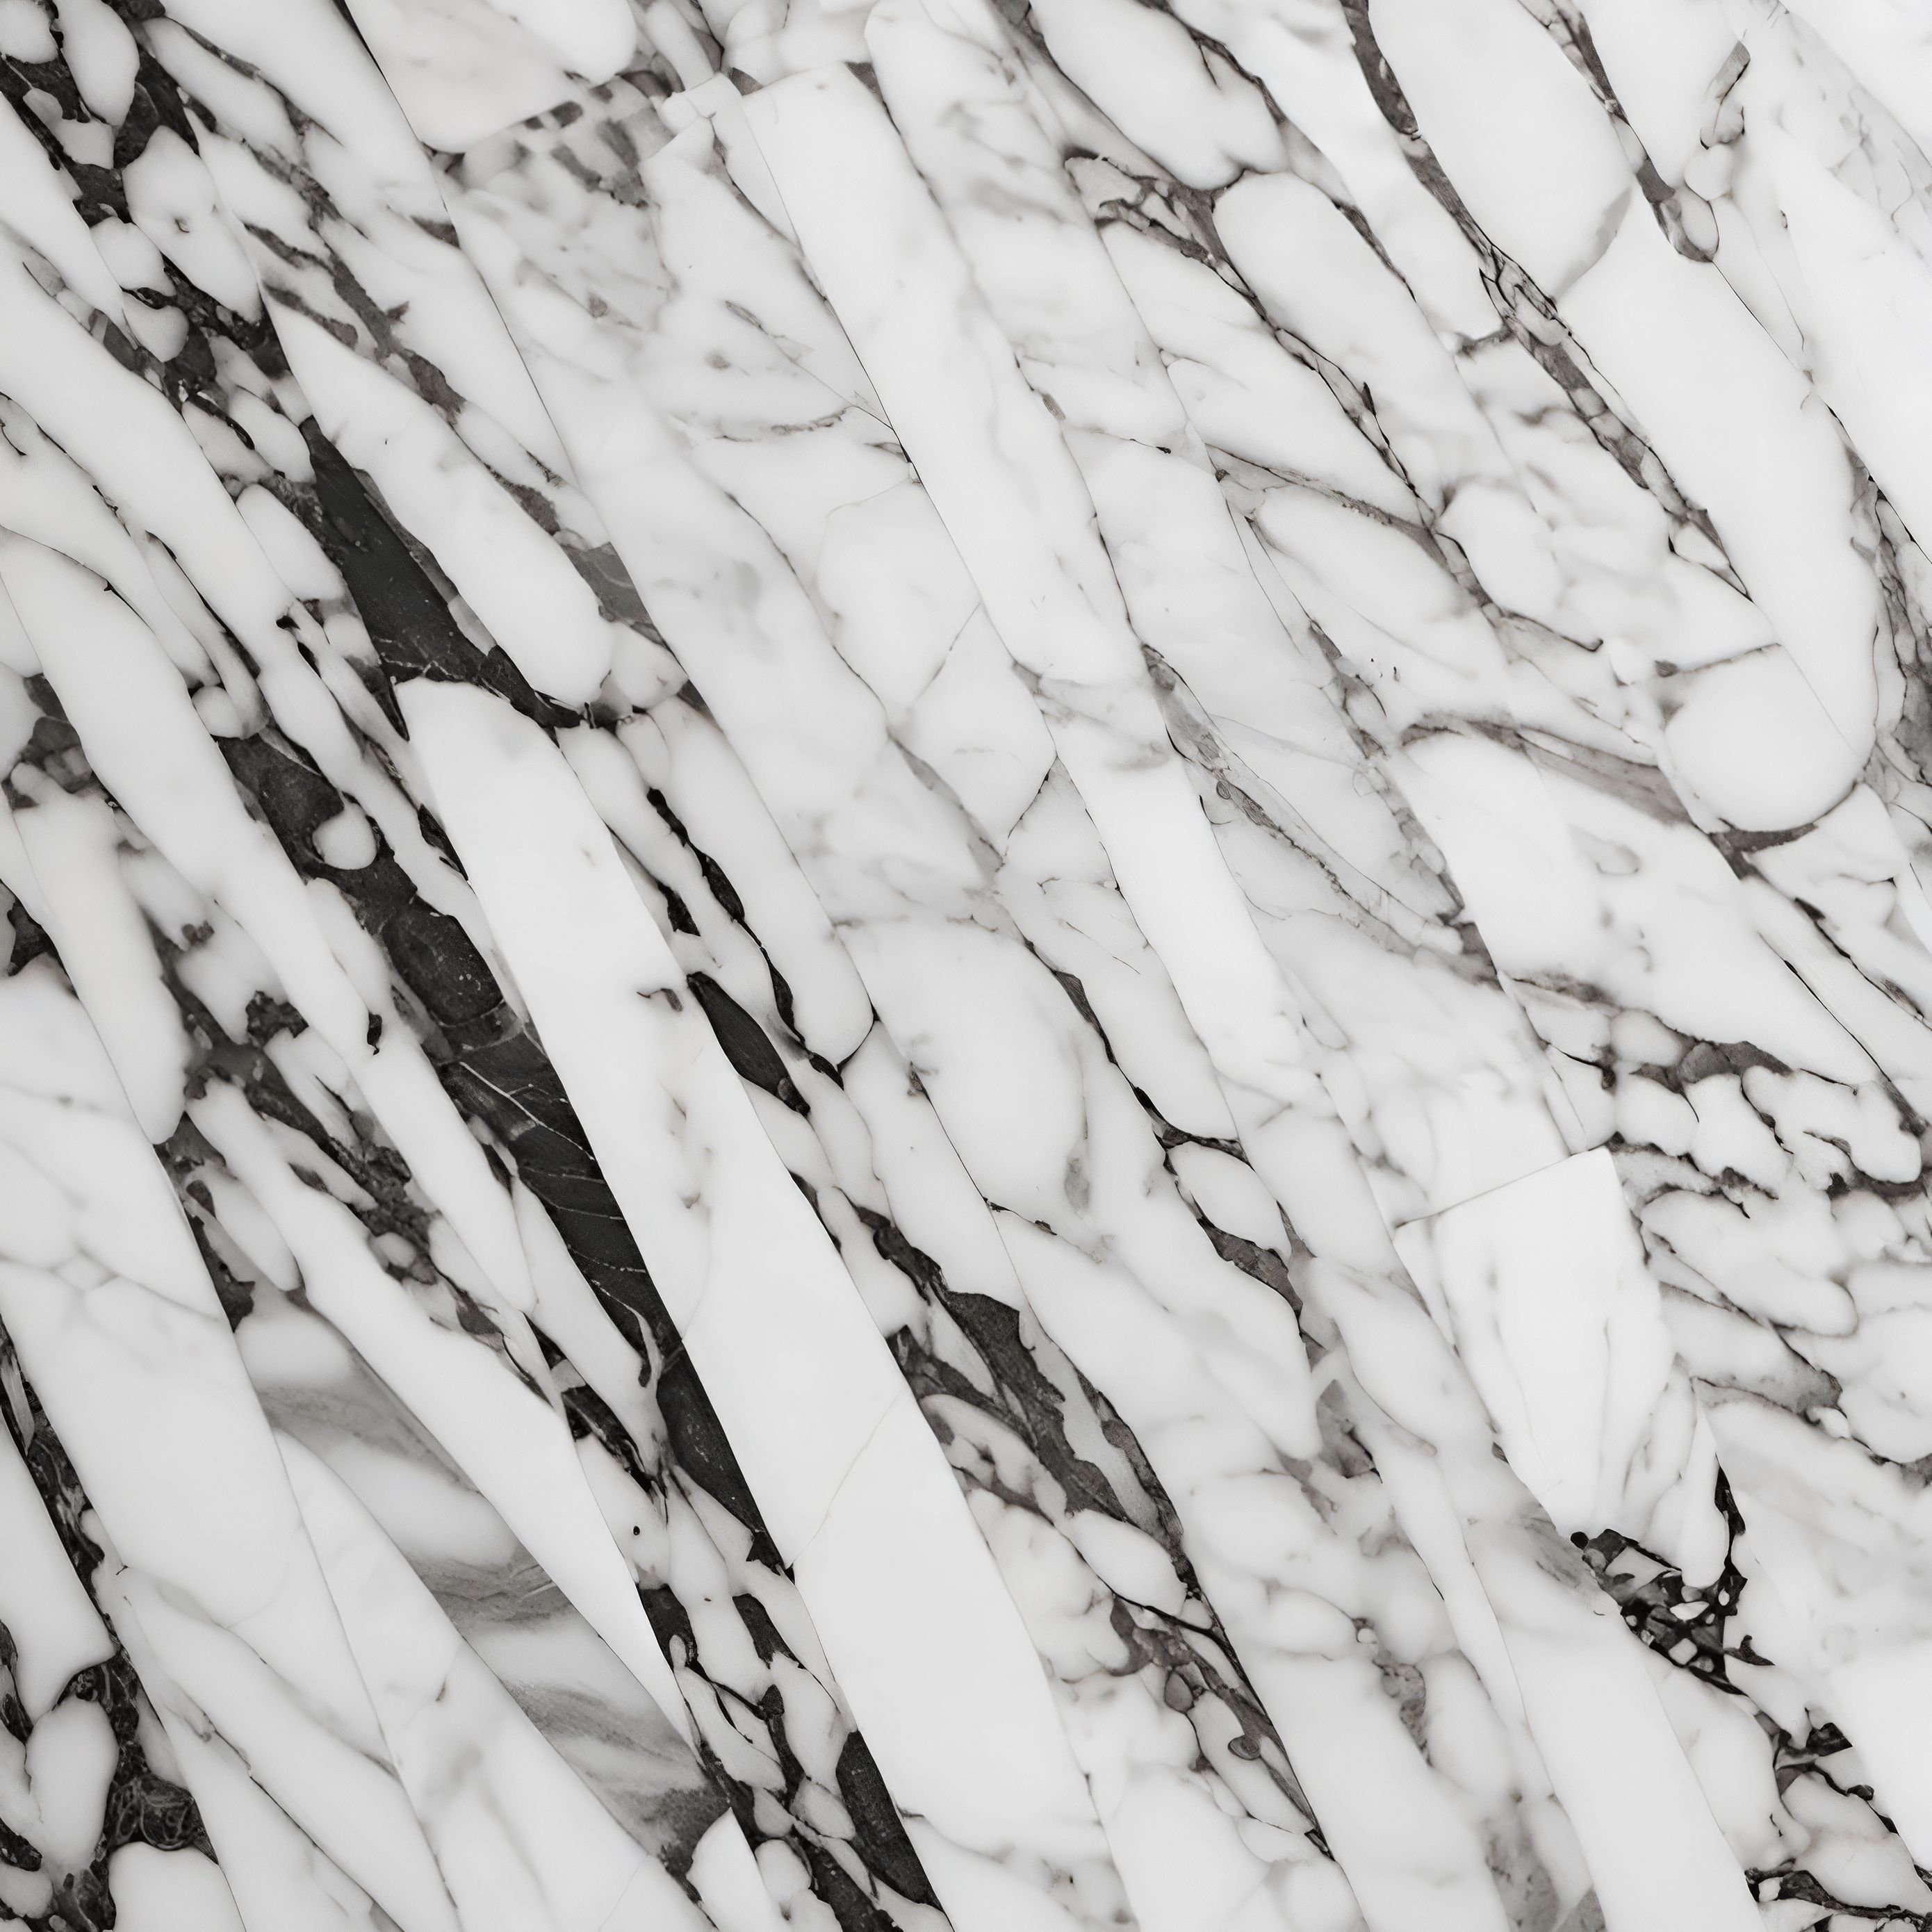 Download wallpaper 2780x2780 marble, bw, texture ipad air, ipad air 2 ...